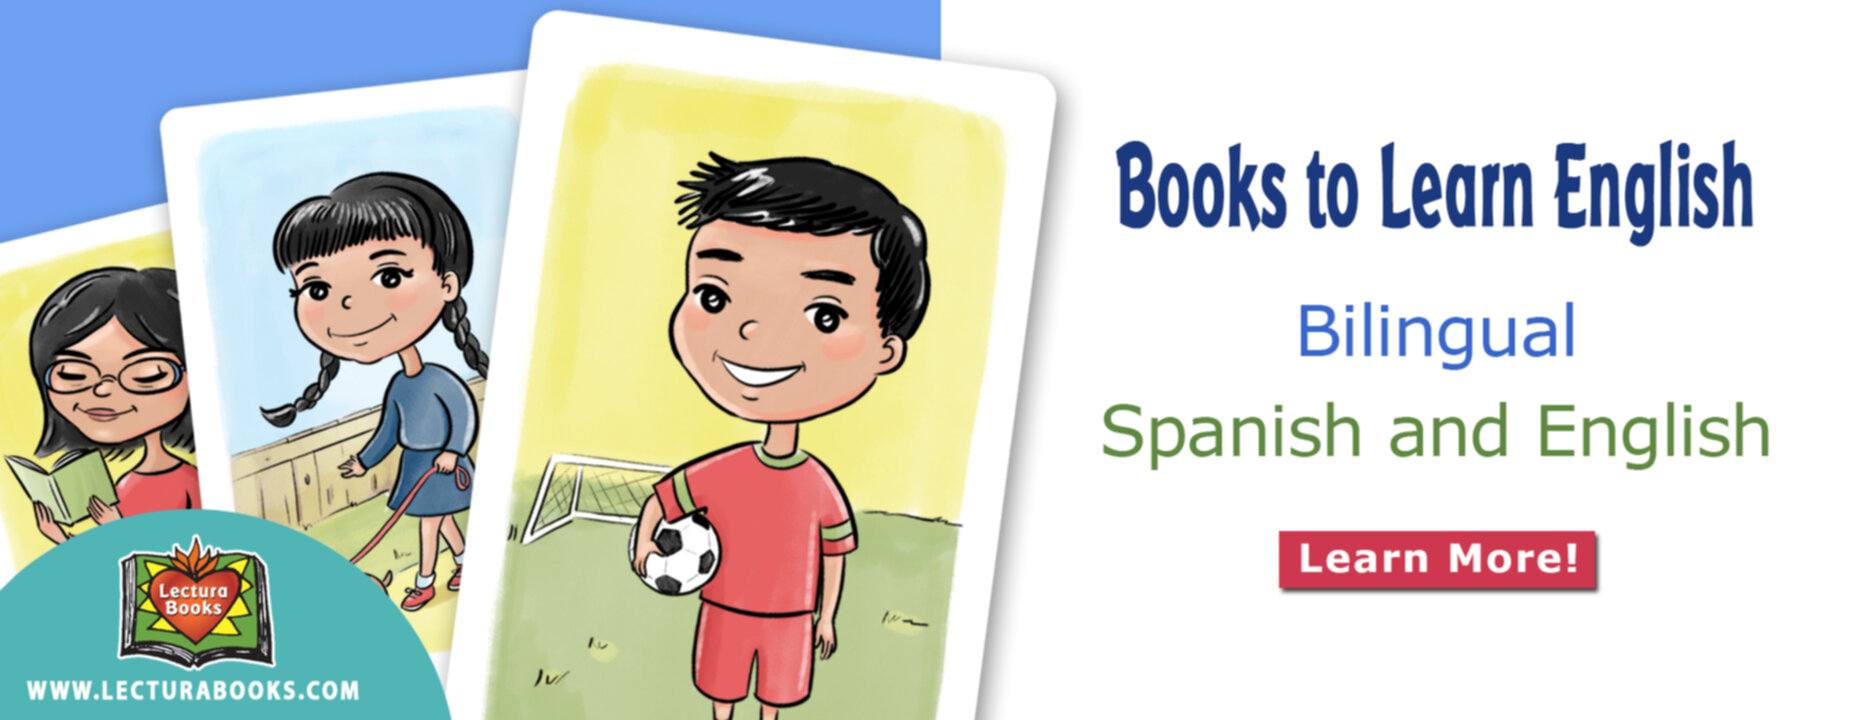 Bilingual Books for English Language Learners